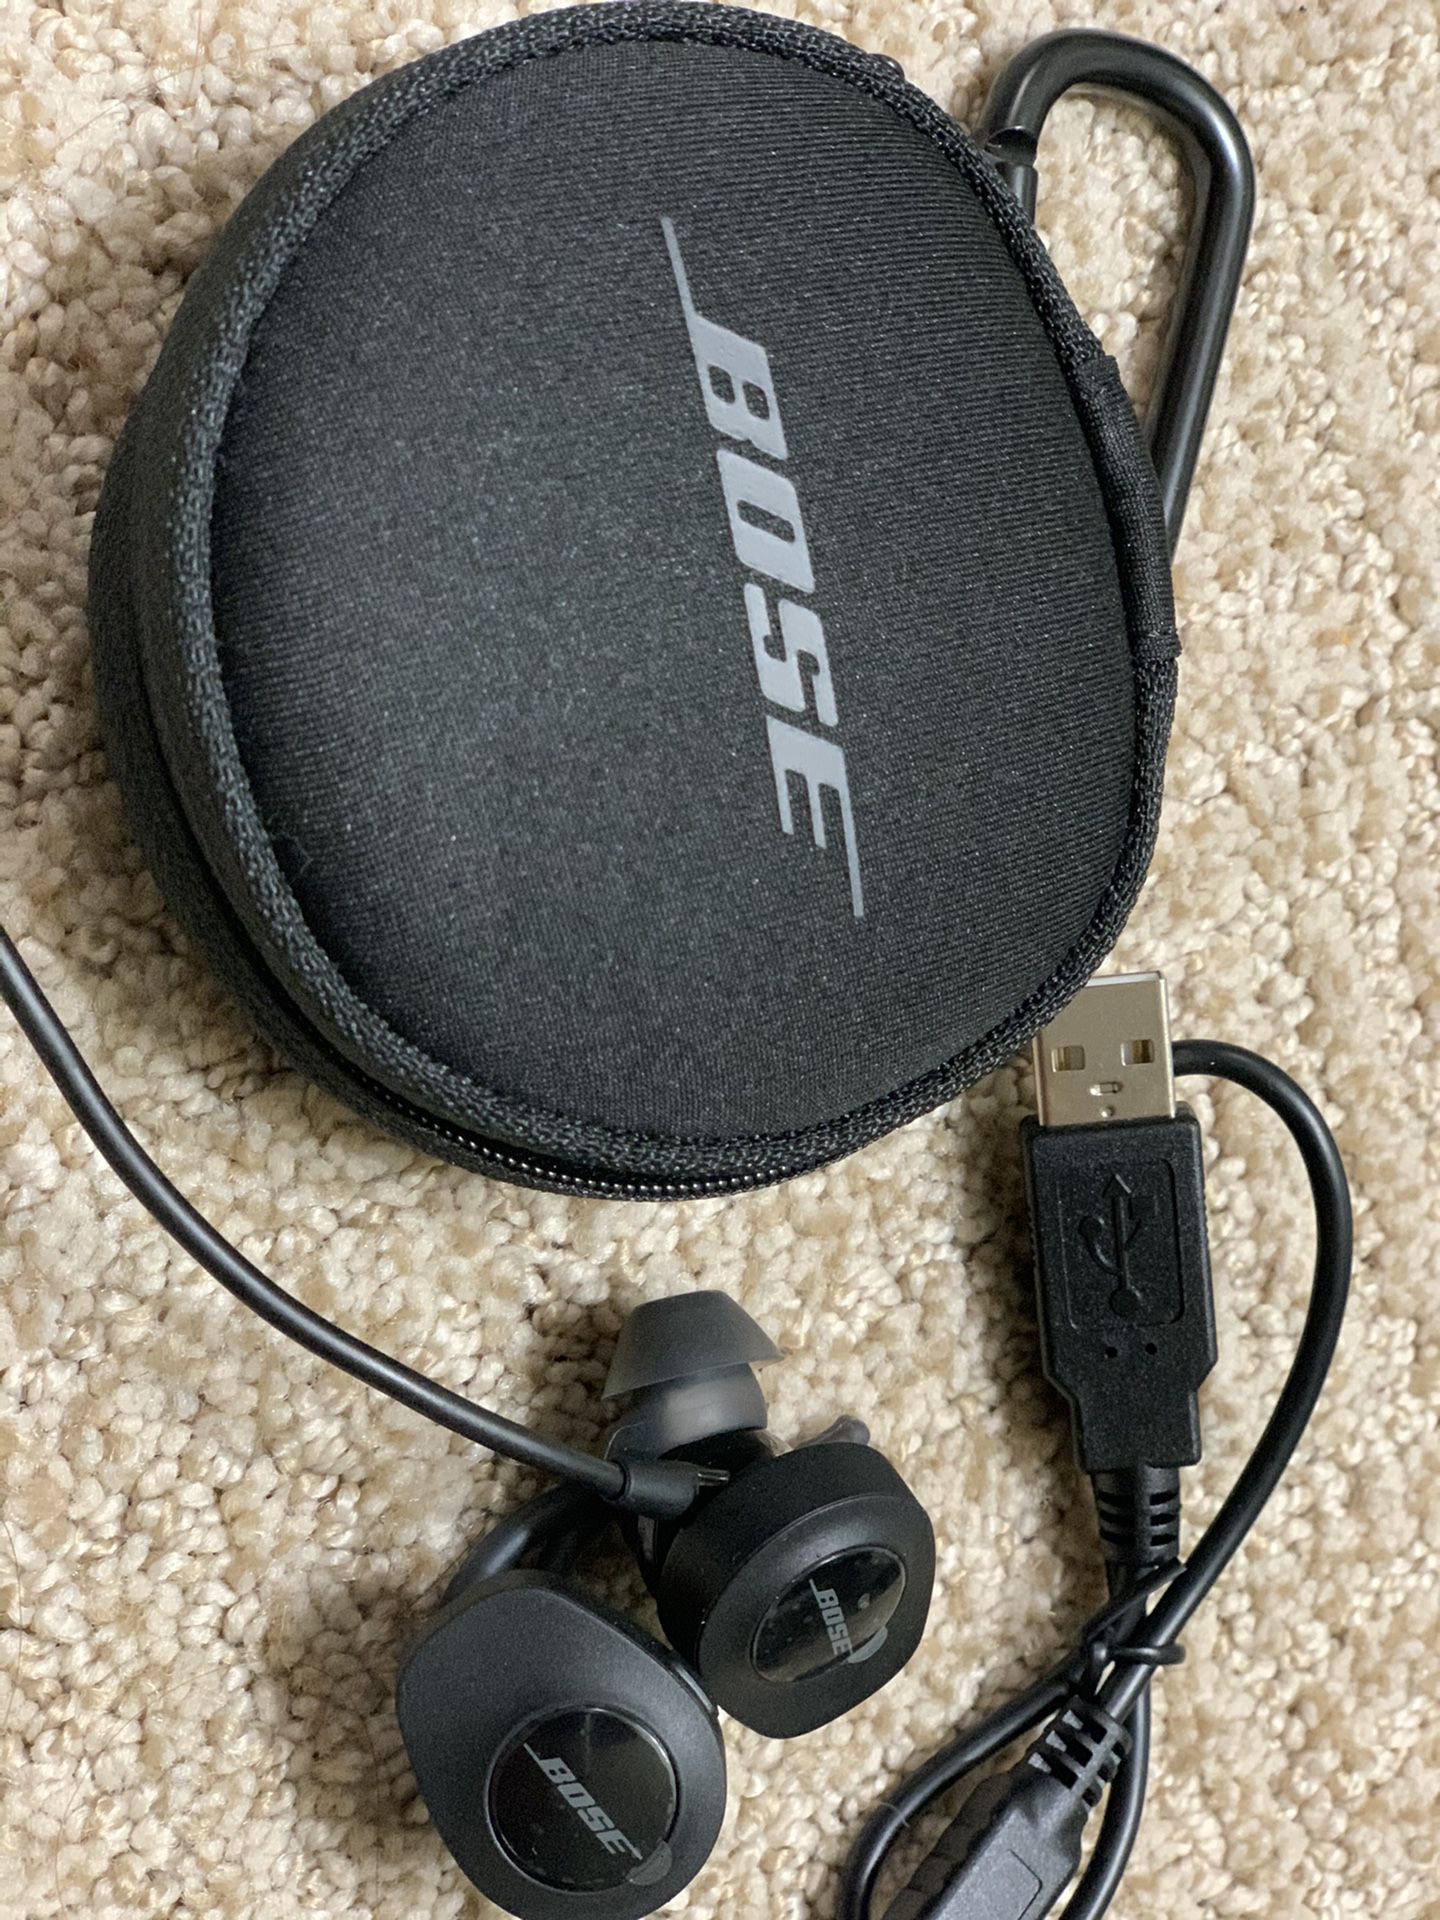 Bose SoundSport Wireless Earbuds $70